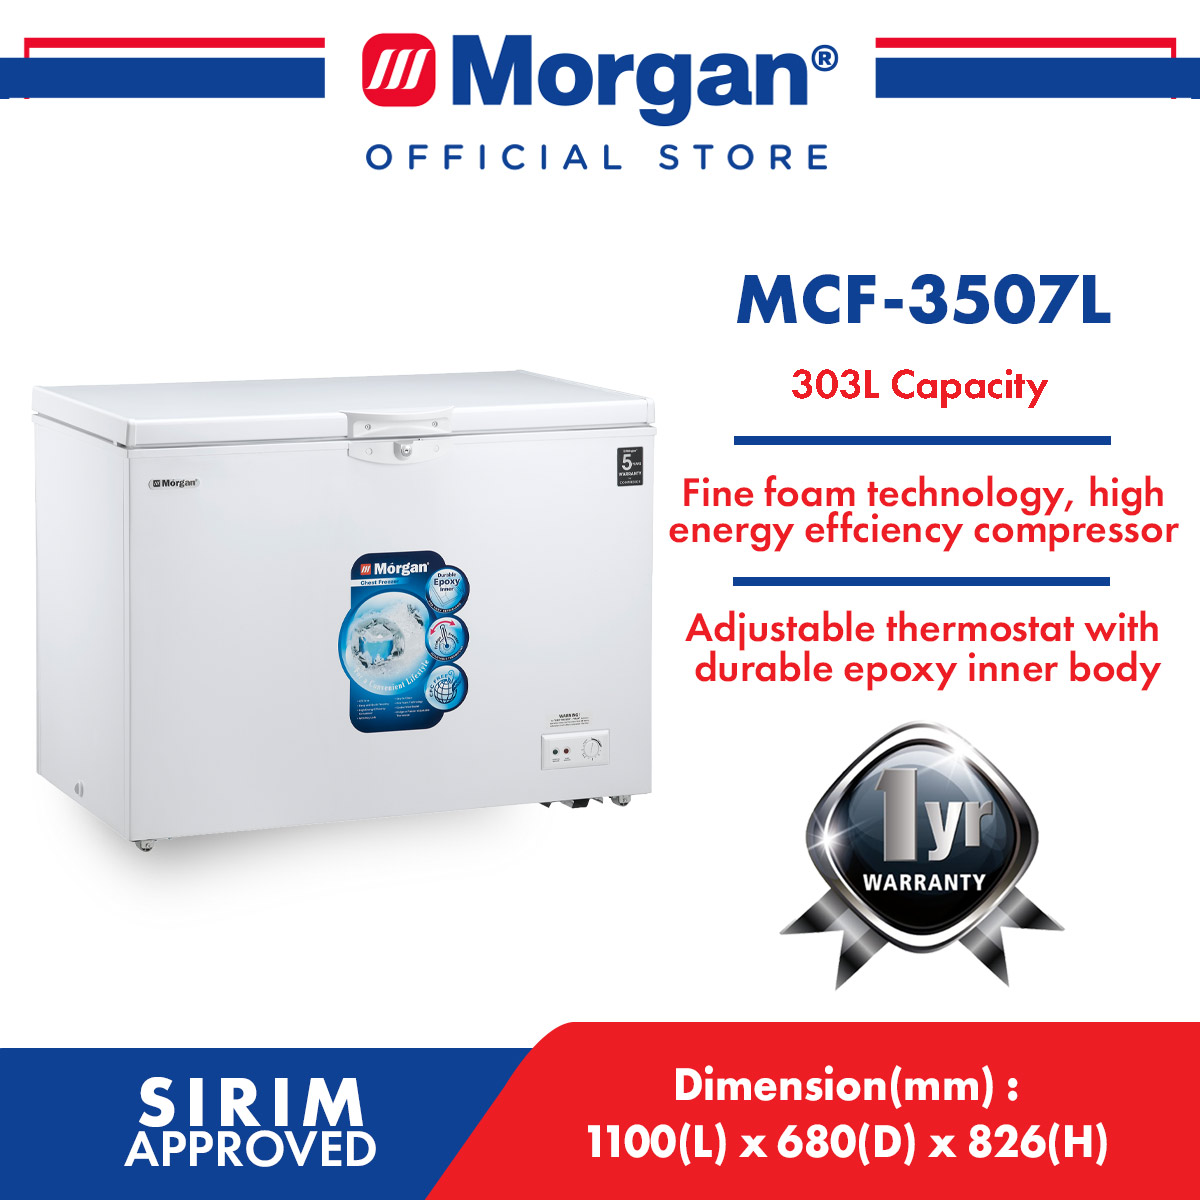 MORGAN MCF-3507L CHEST FREEZER 303L